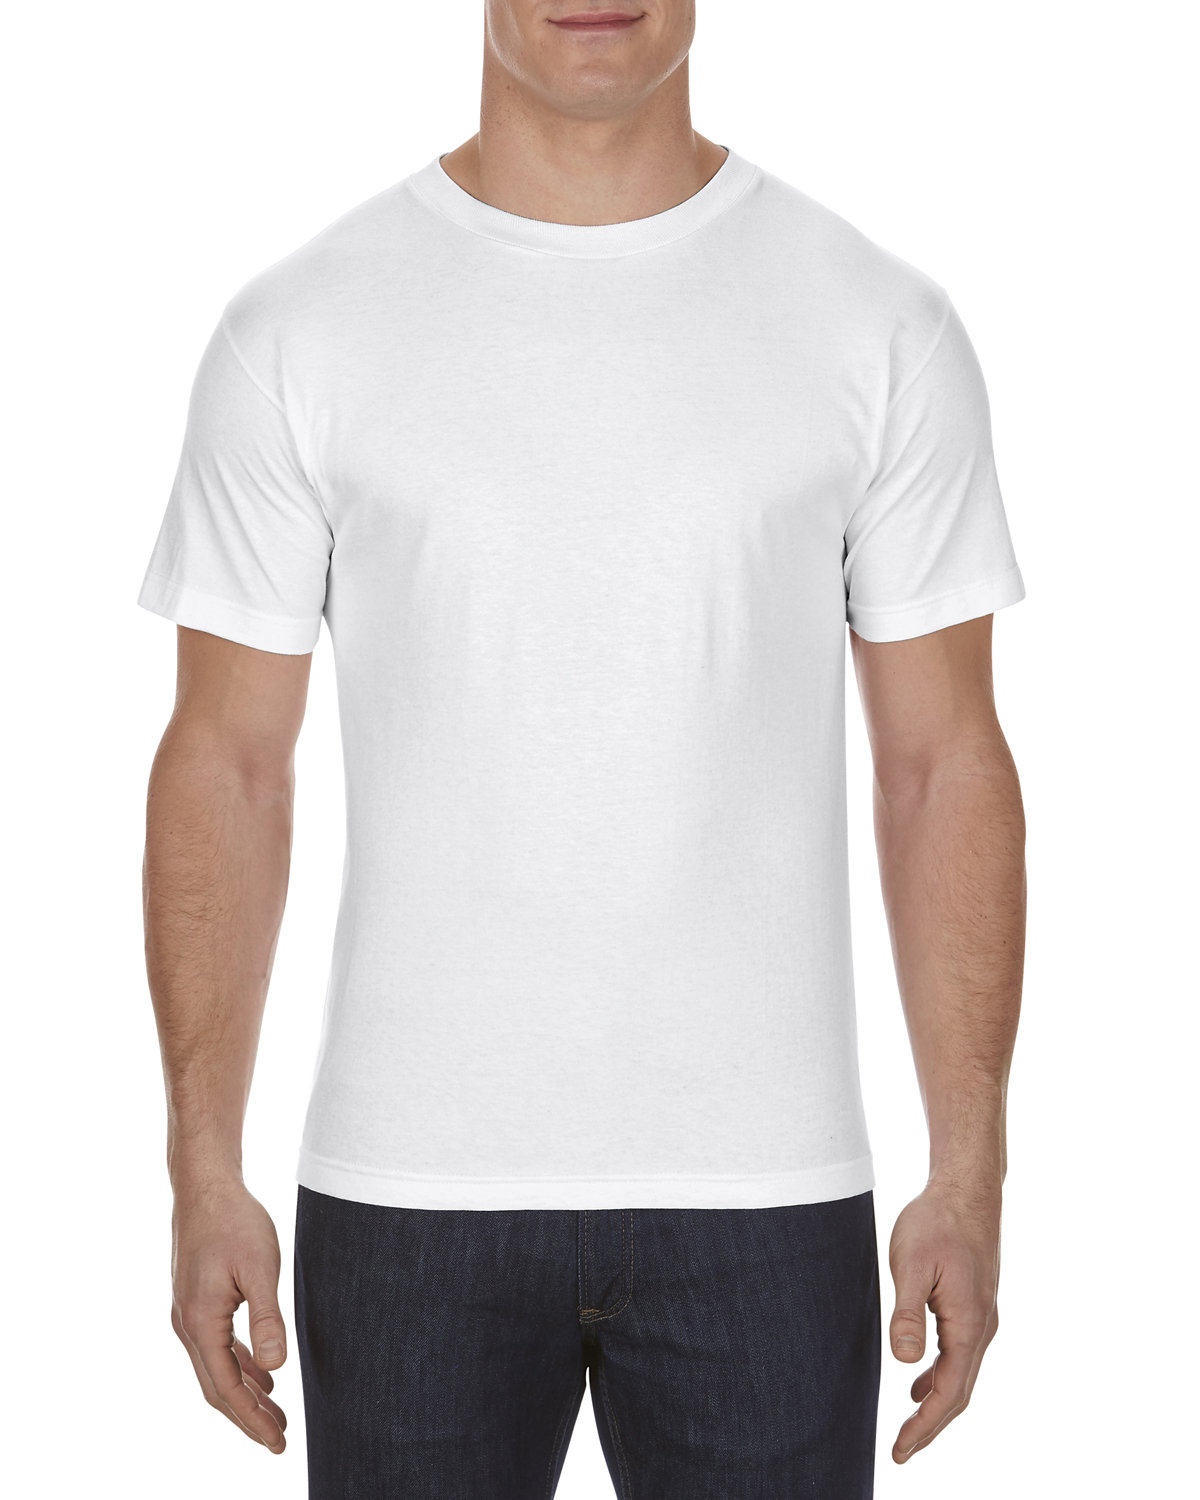 American Apparel Adult 6.0 oz., 100% Cotton T-Shirt WHITE 